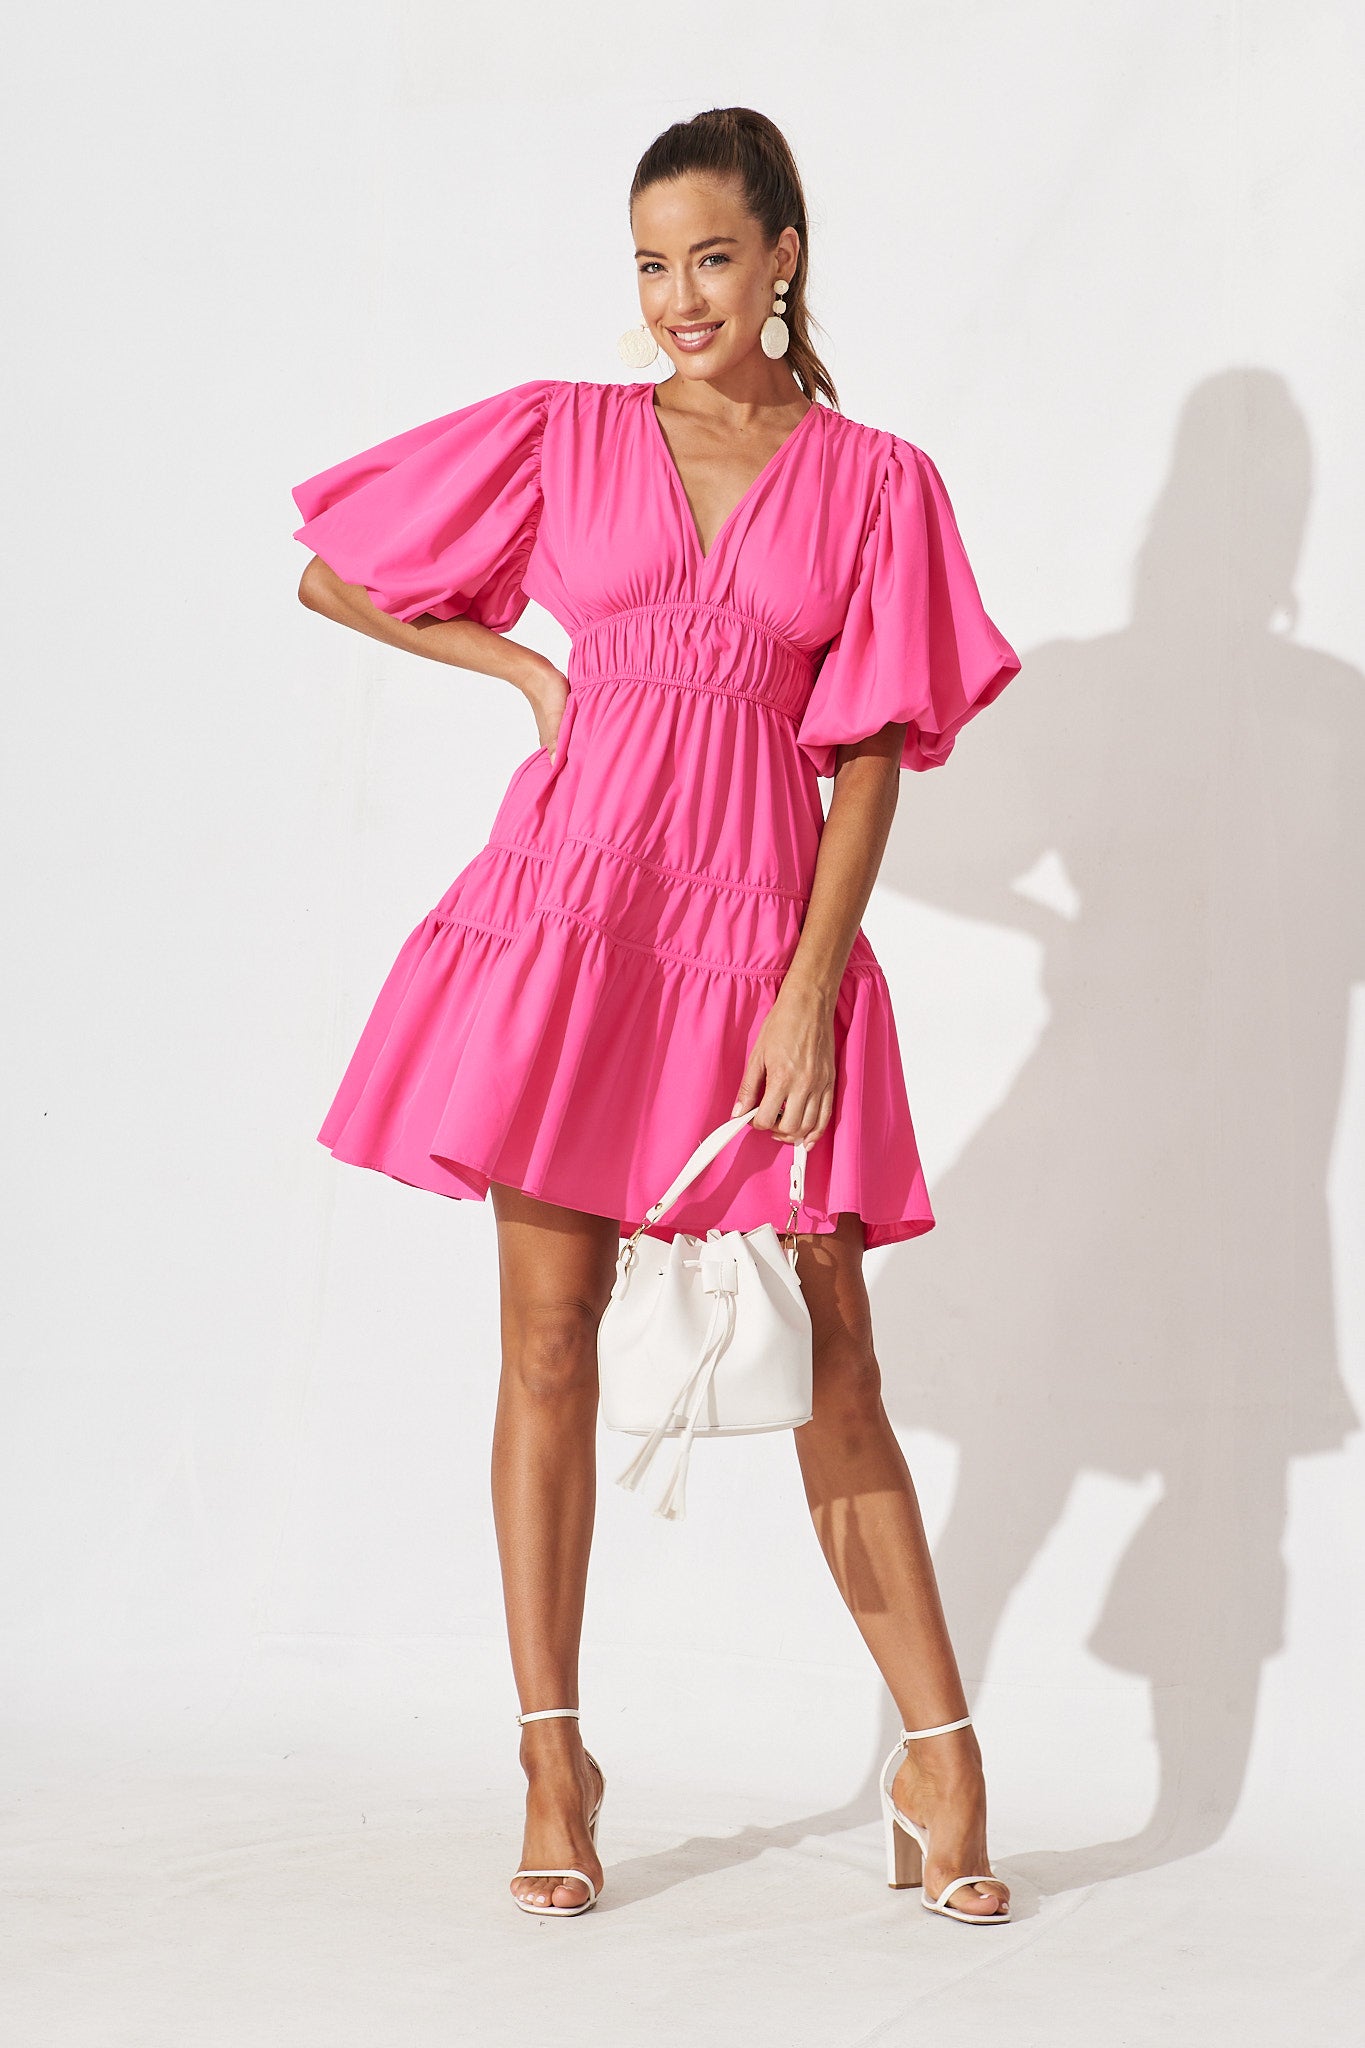 Amarini Dress In Hot Pink - full length